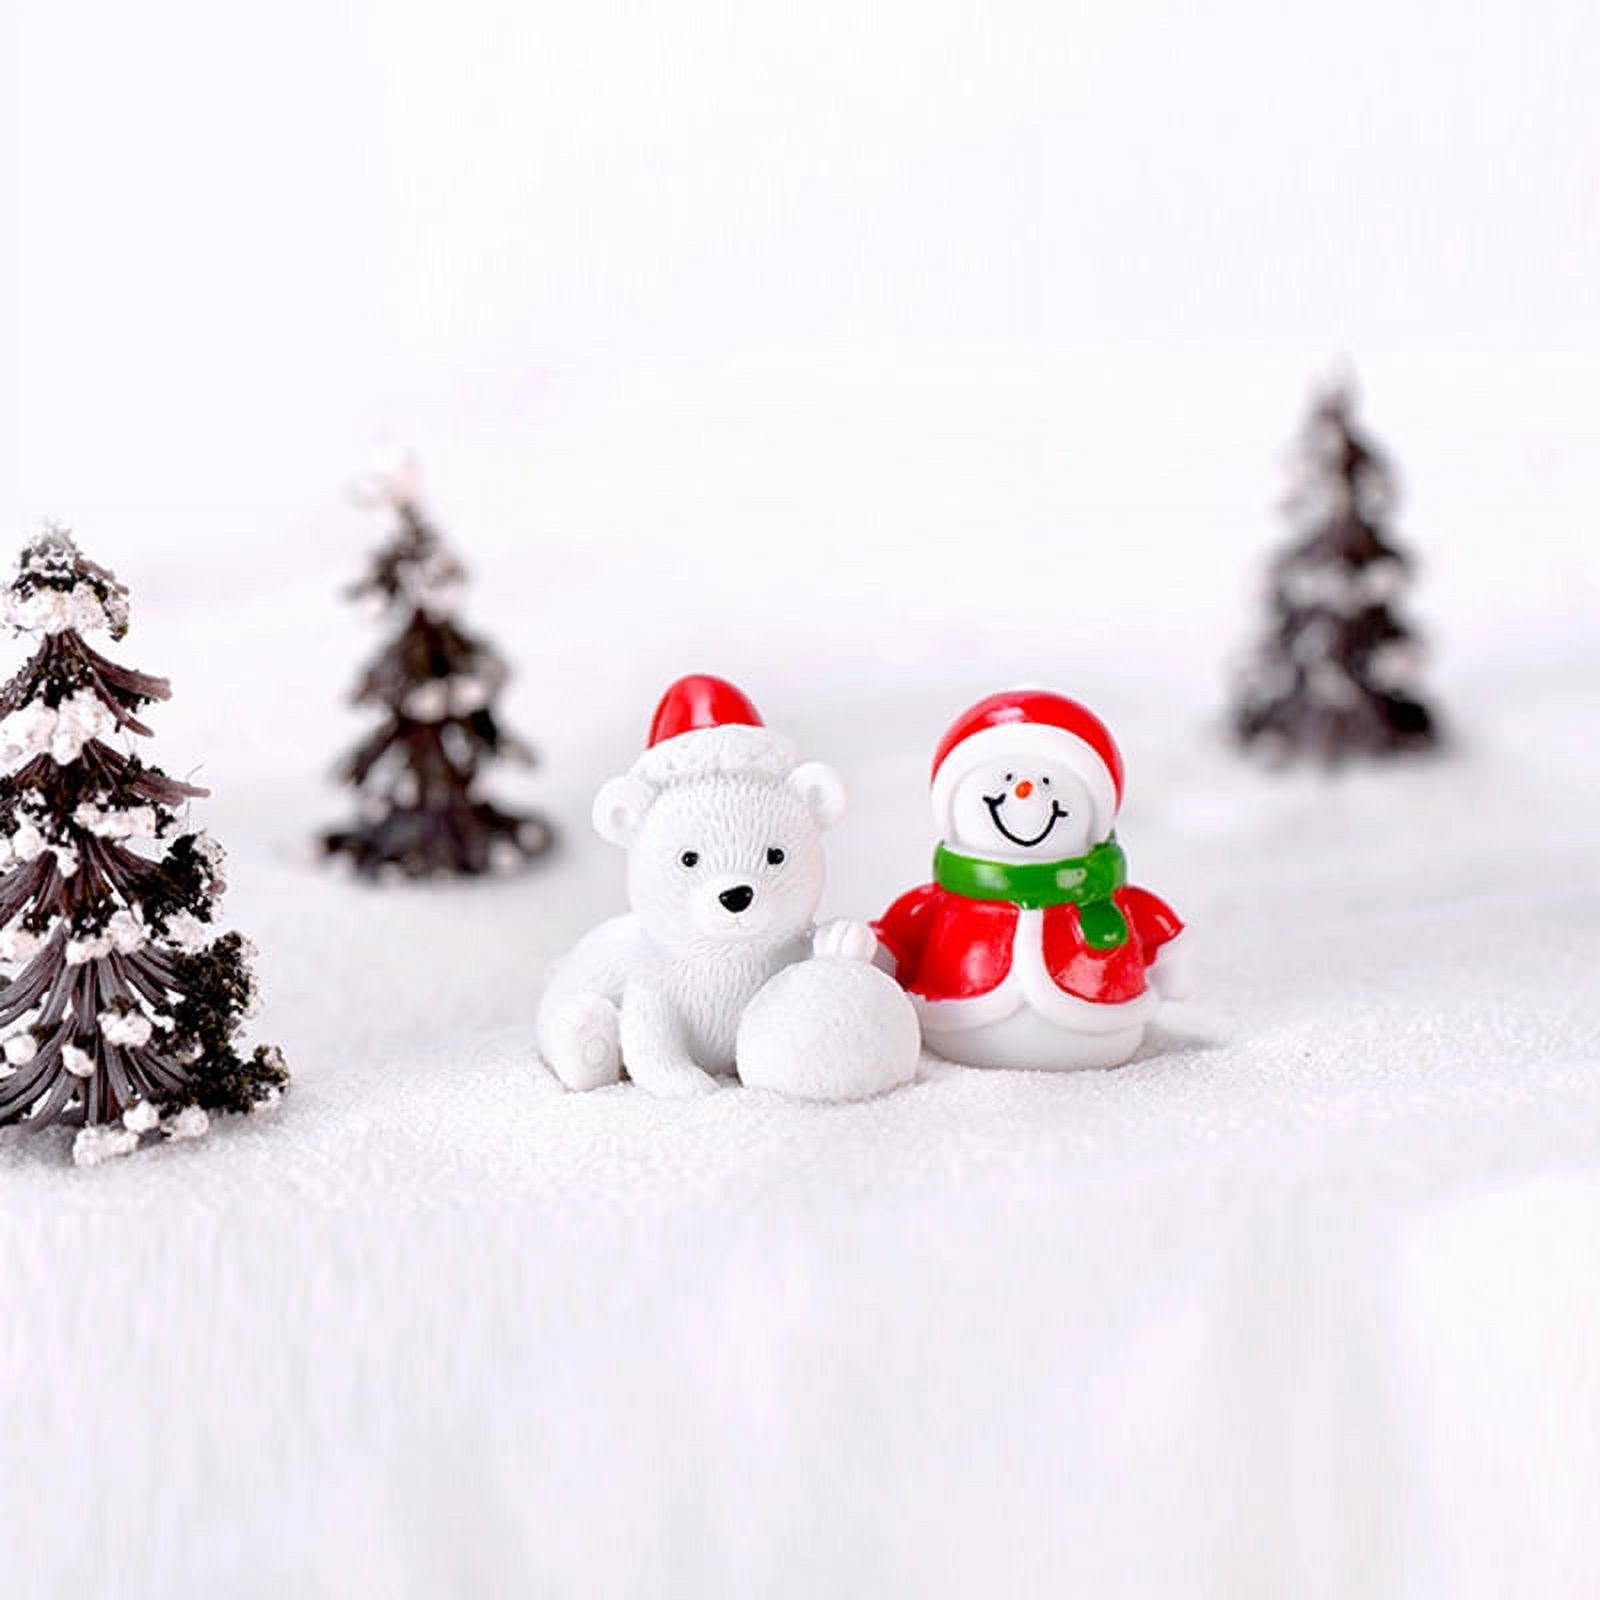 Resin Christmas Trees Figures Miniature Fairy DIY Landscape Figurine Dolls House Garden Decorations;Resin Christmas Trees Figures Miniature DIY Landscape Figurine Dolls Decor - image 5 of 9